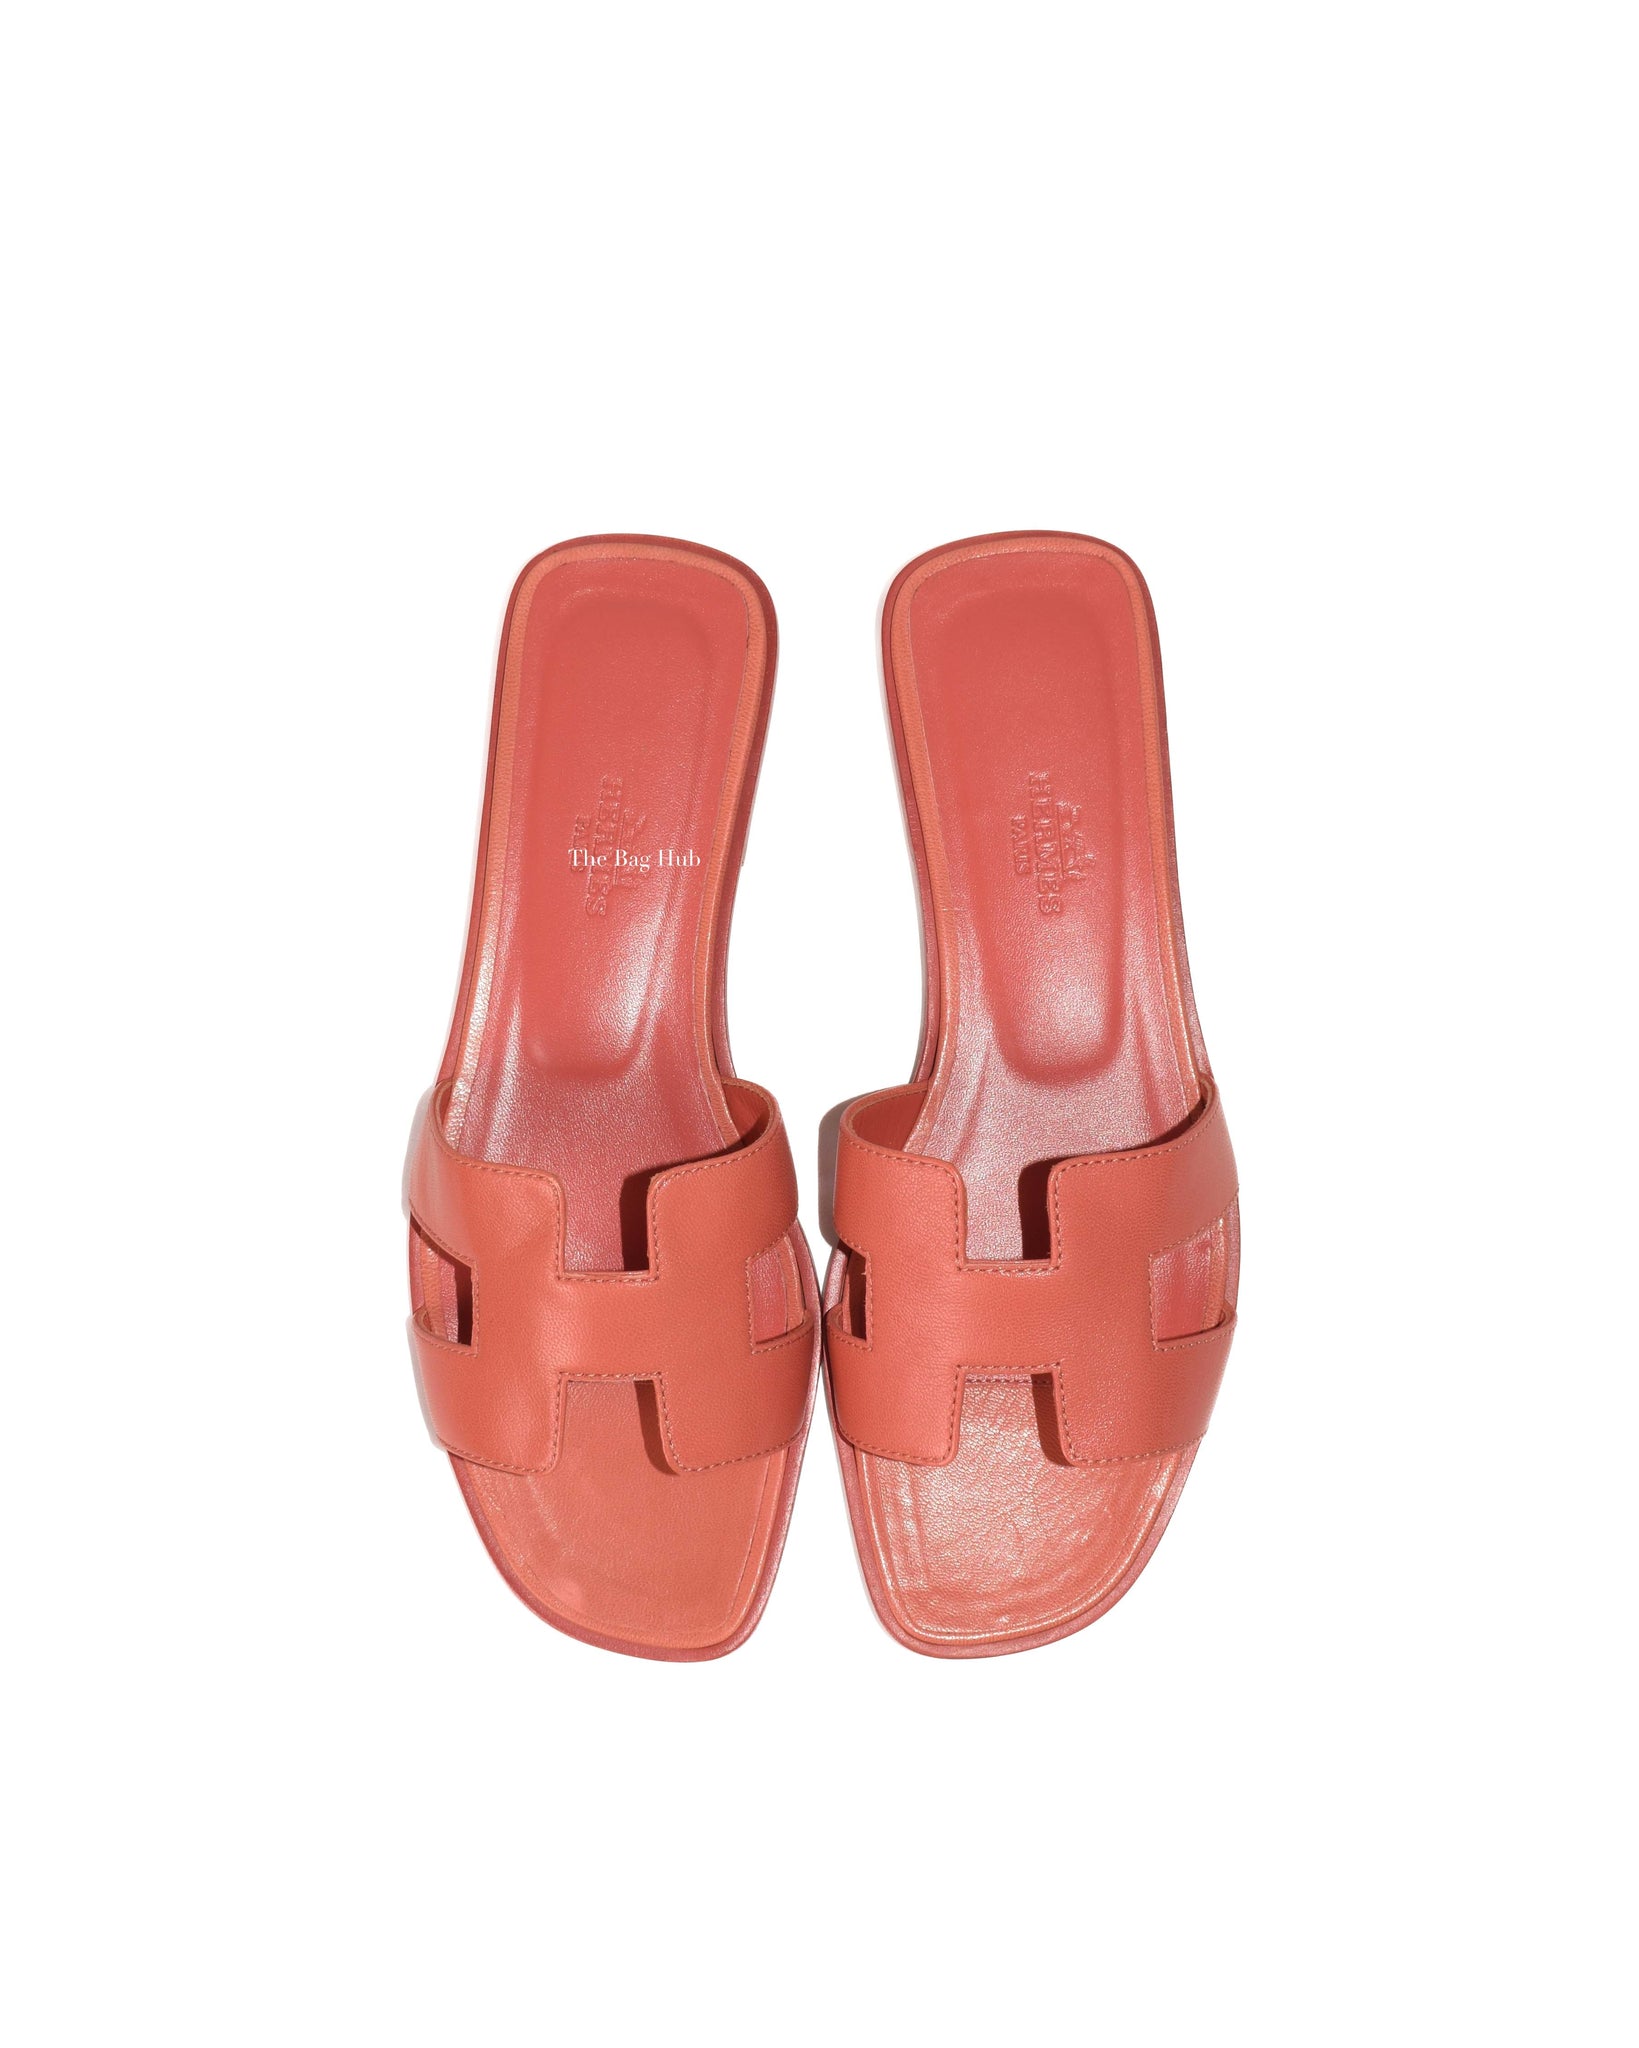 Hermes Oran Sandal Rouge Blush Chevre 37 / 7 New w/ Box